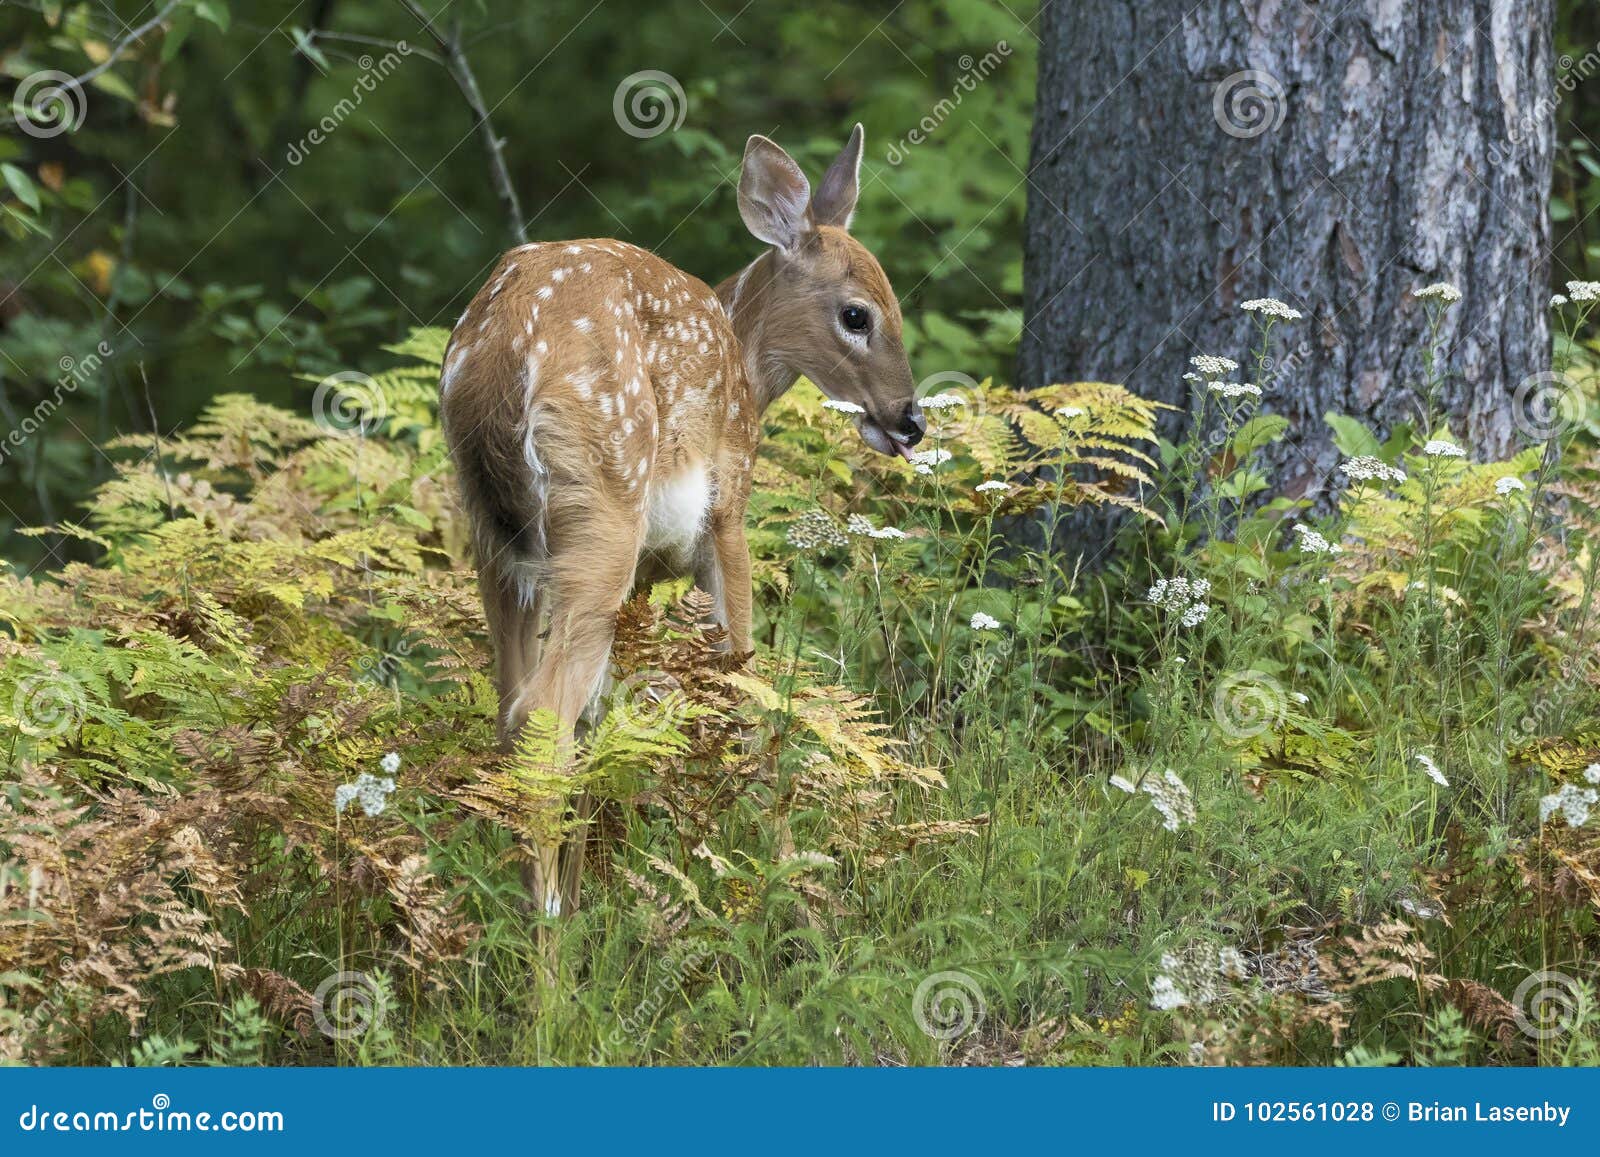 white-tailed deer fawn odocoileus virginianus browsing on the